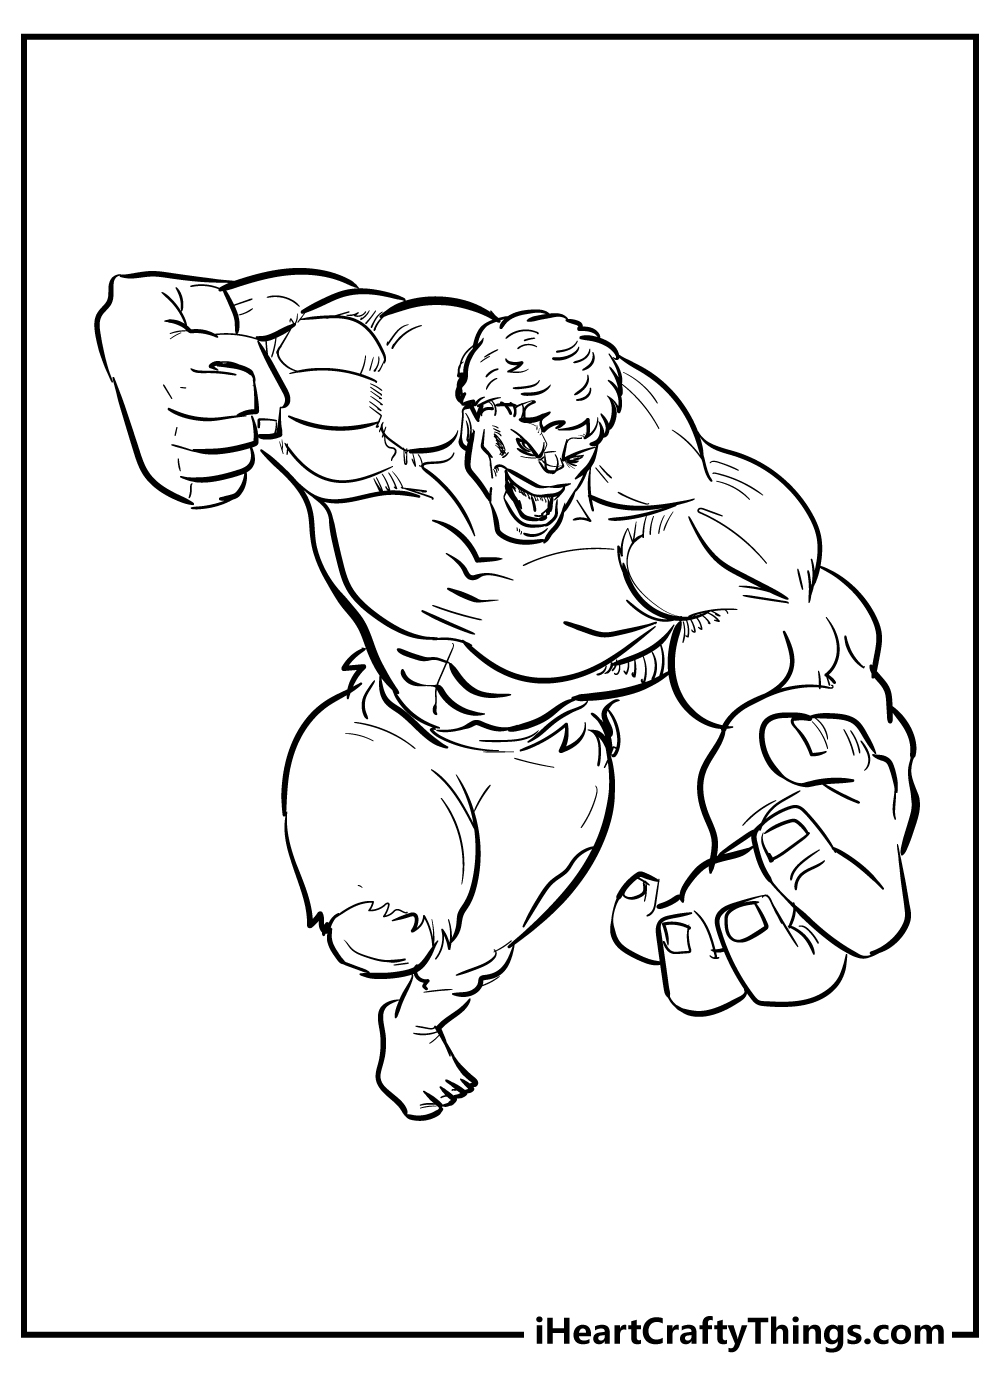 Hulk coloring pages free printables